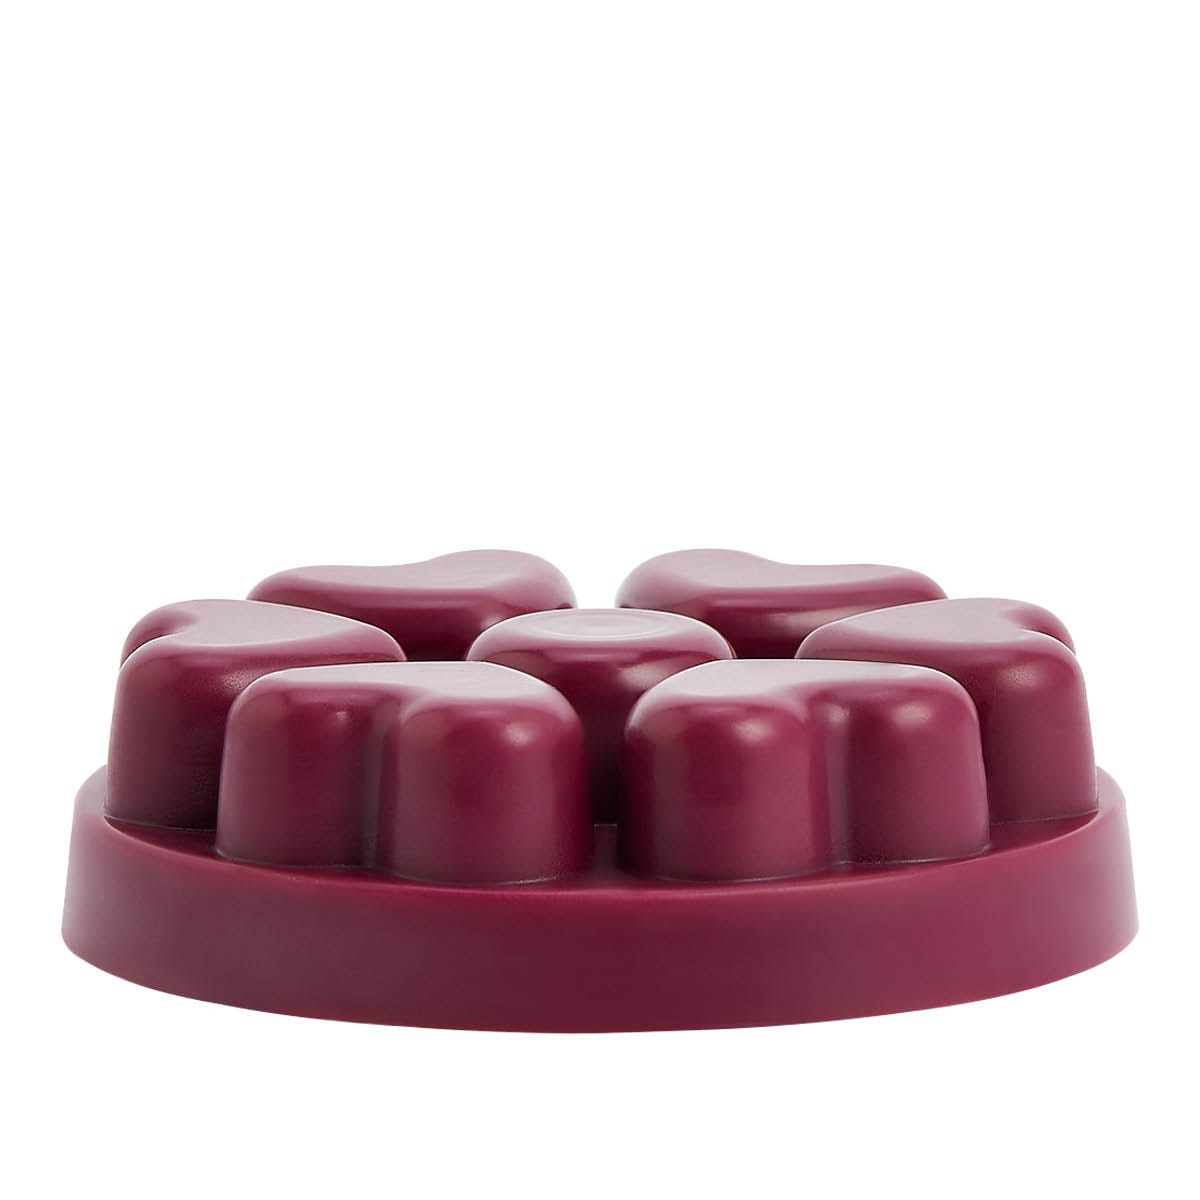 Cranberry Thyme Scent Plus® Heart Melts - PartyLite US